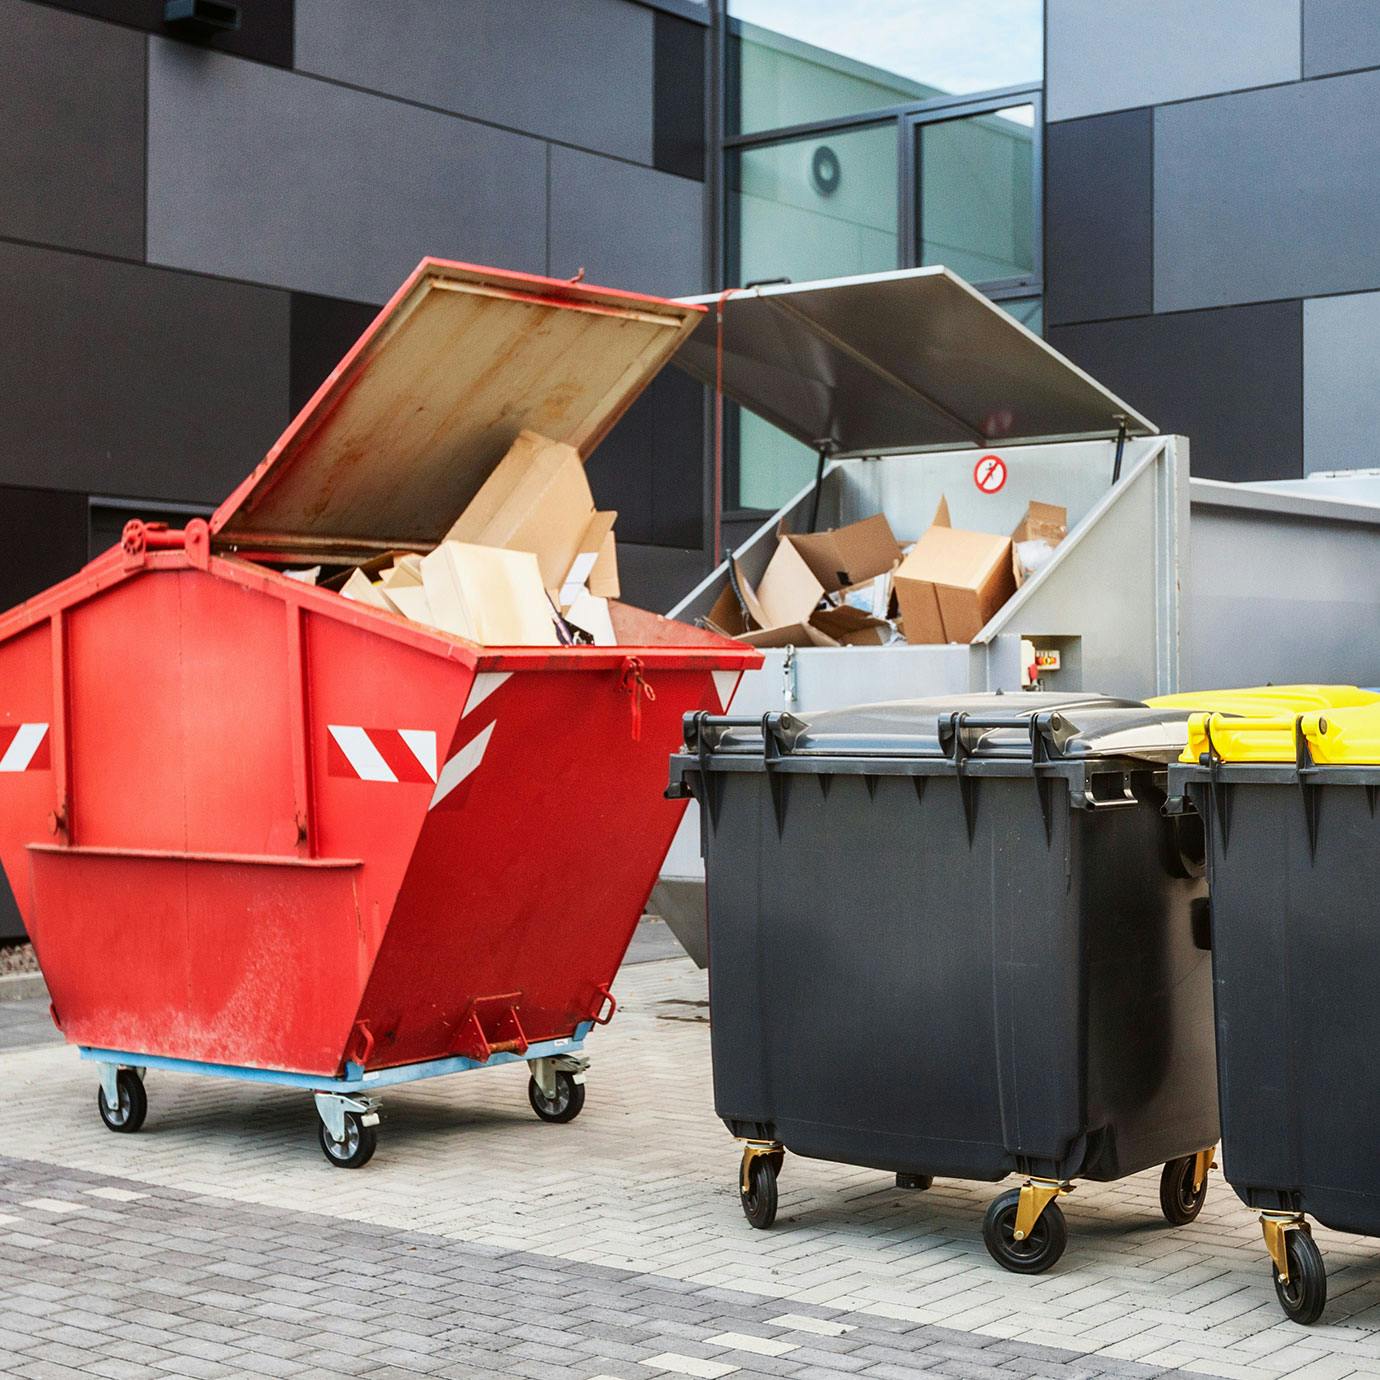 Different types of waste container - bins, skip, baler